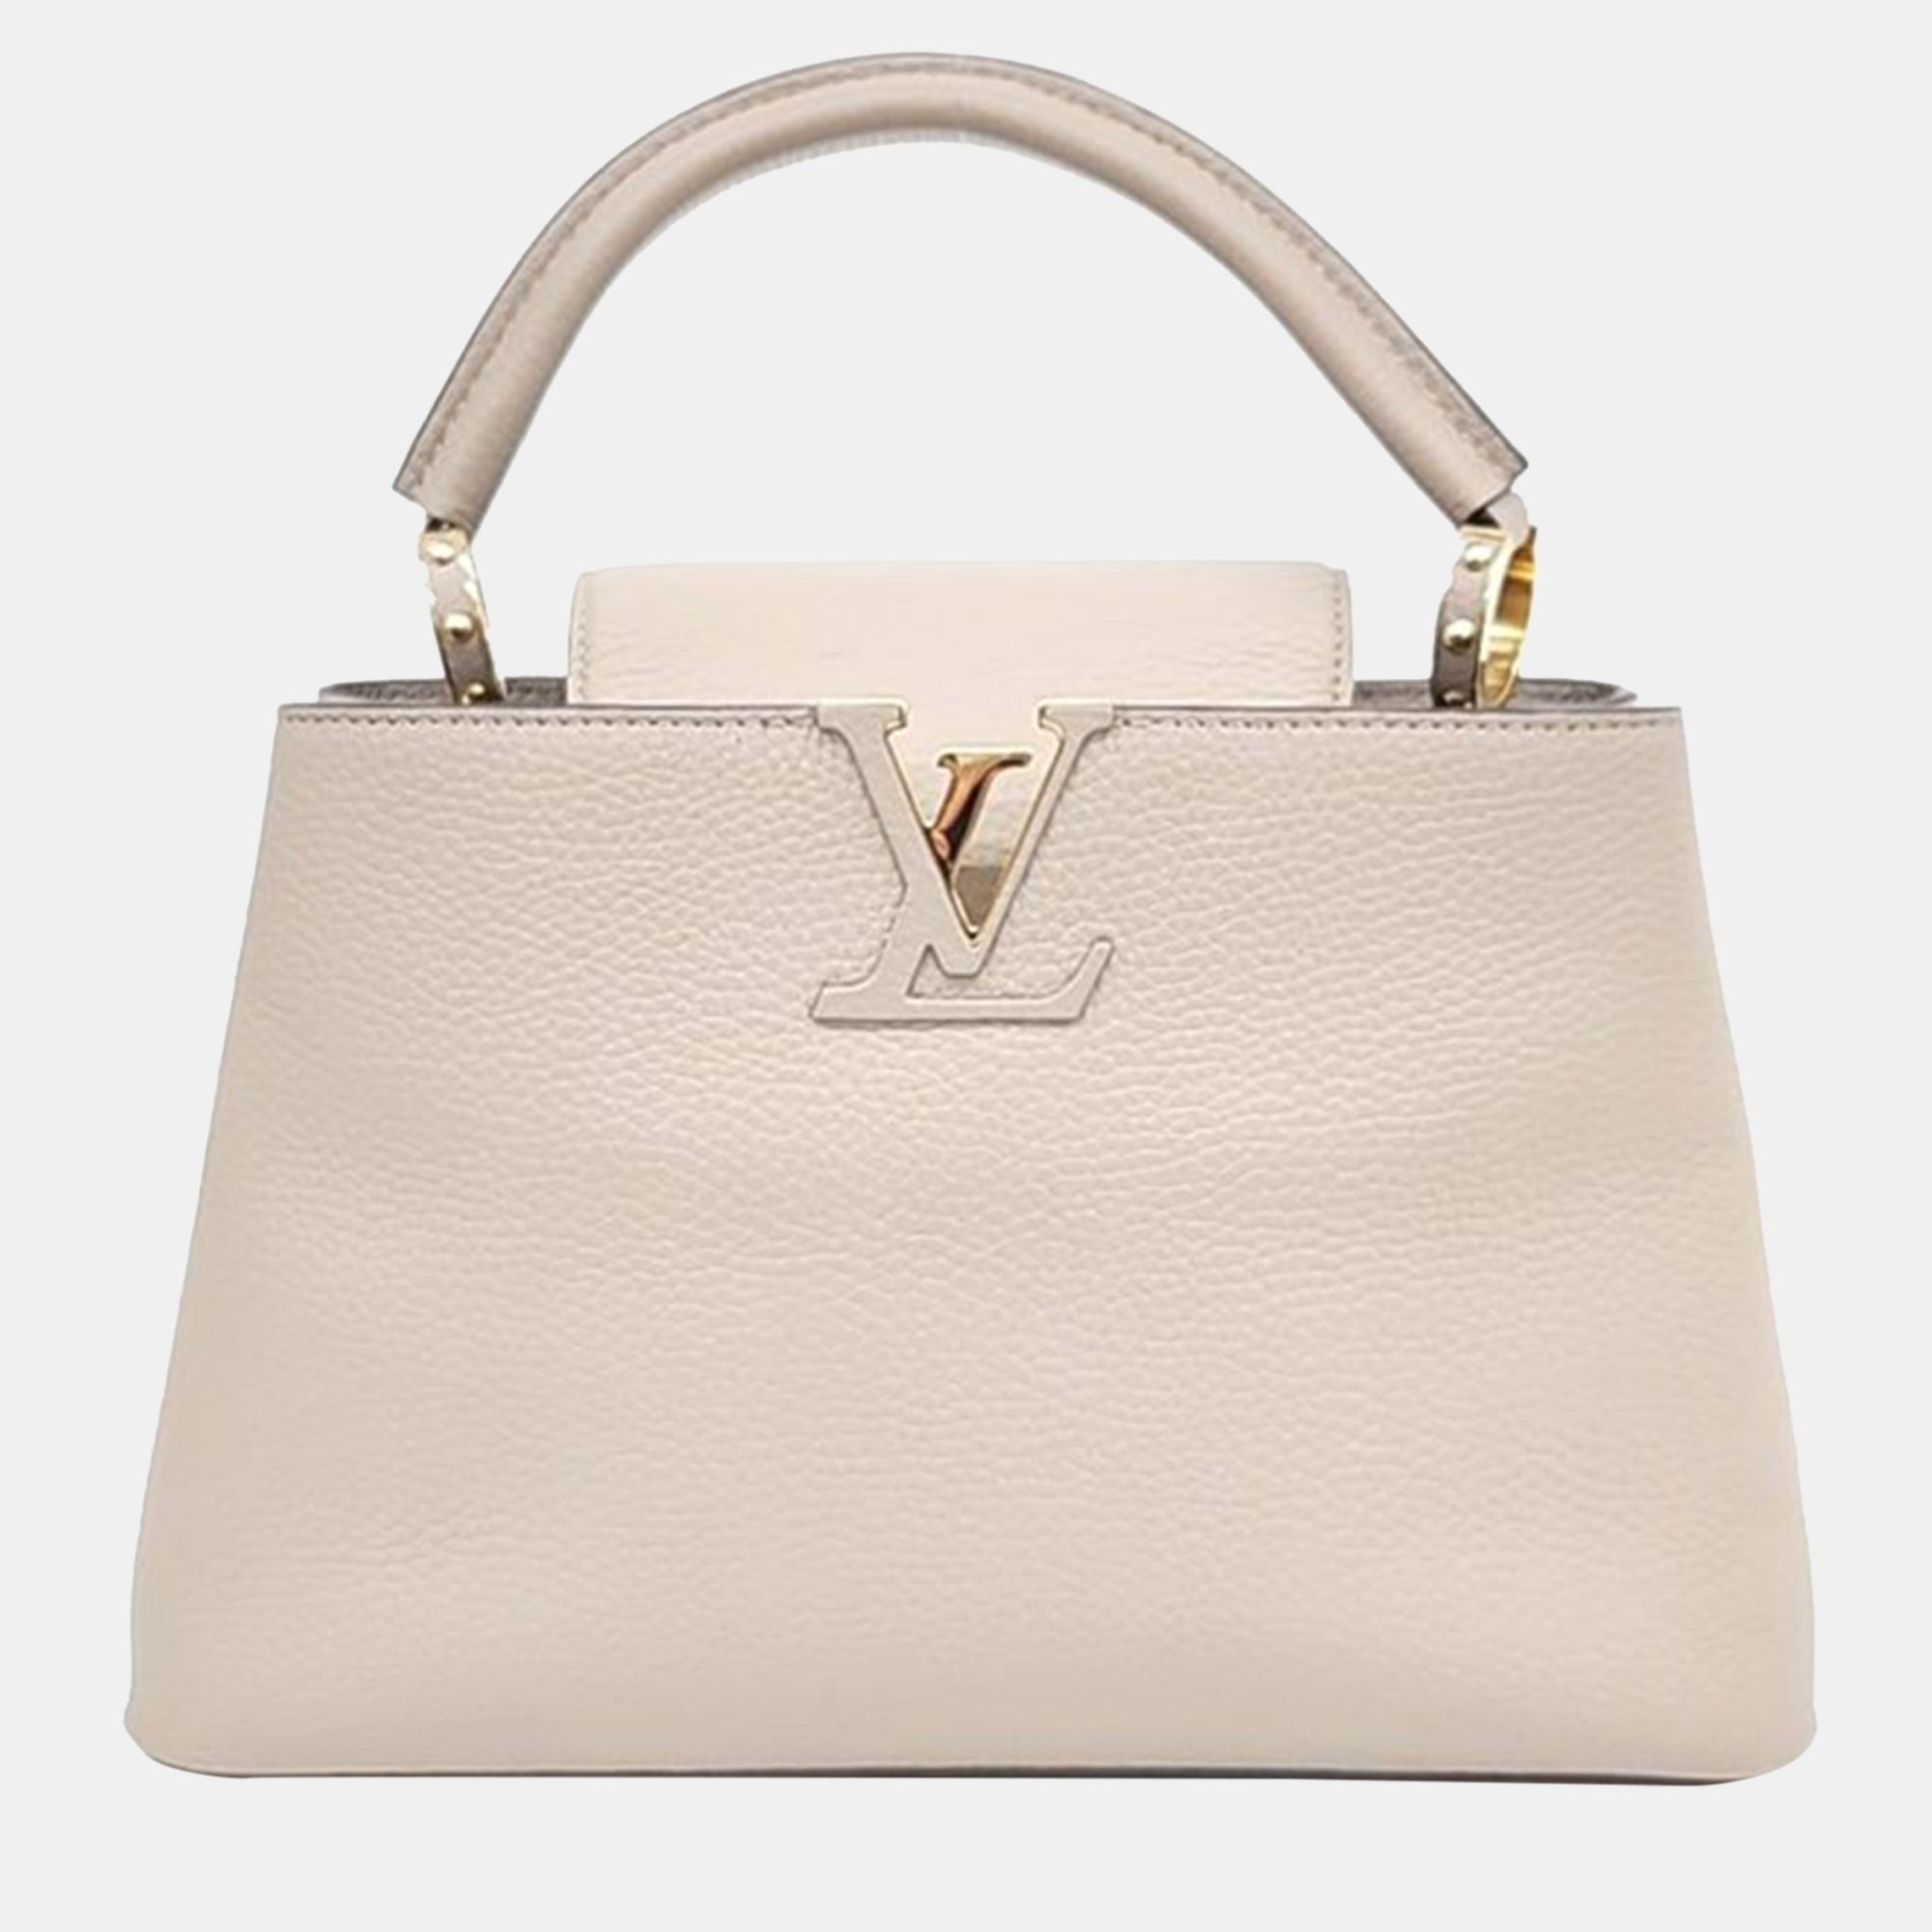 Pre-owned Louis Vuitton Capucines Pm M42253 Handbag In White